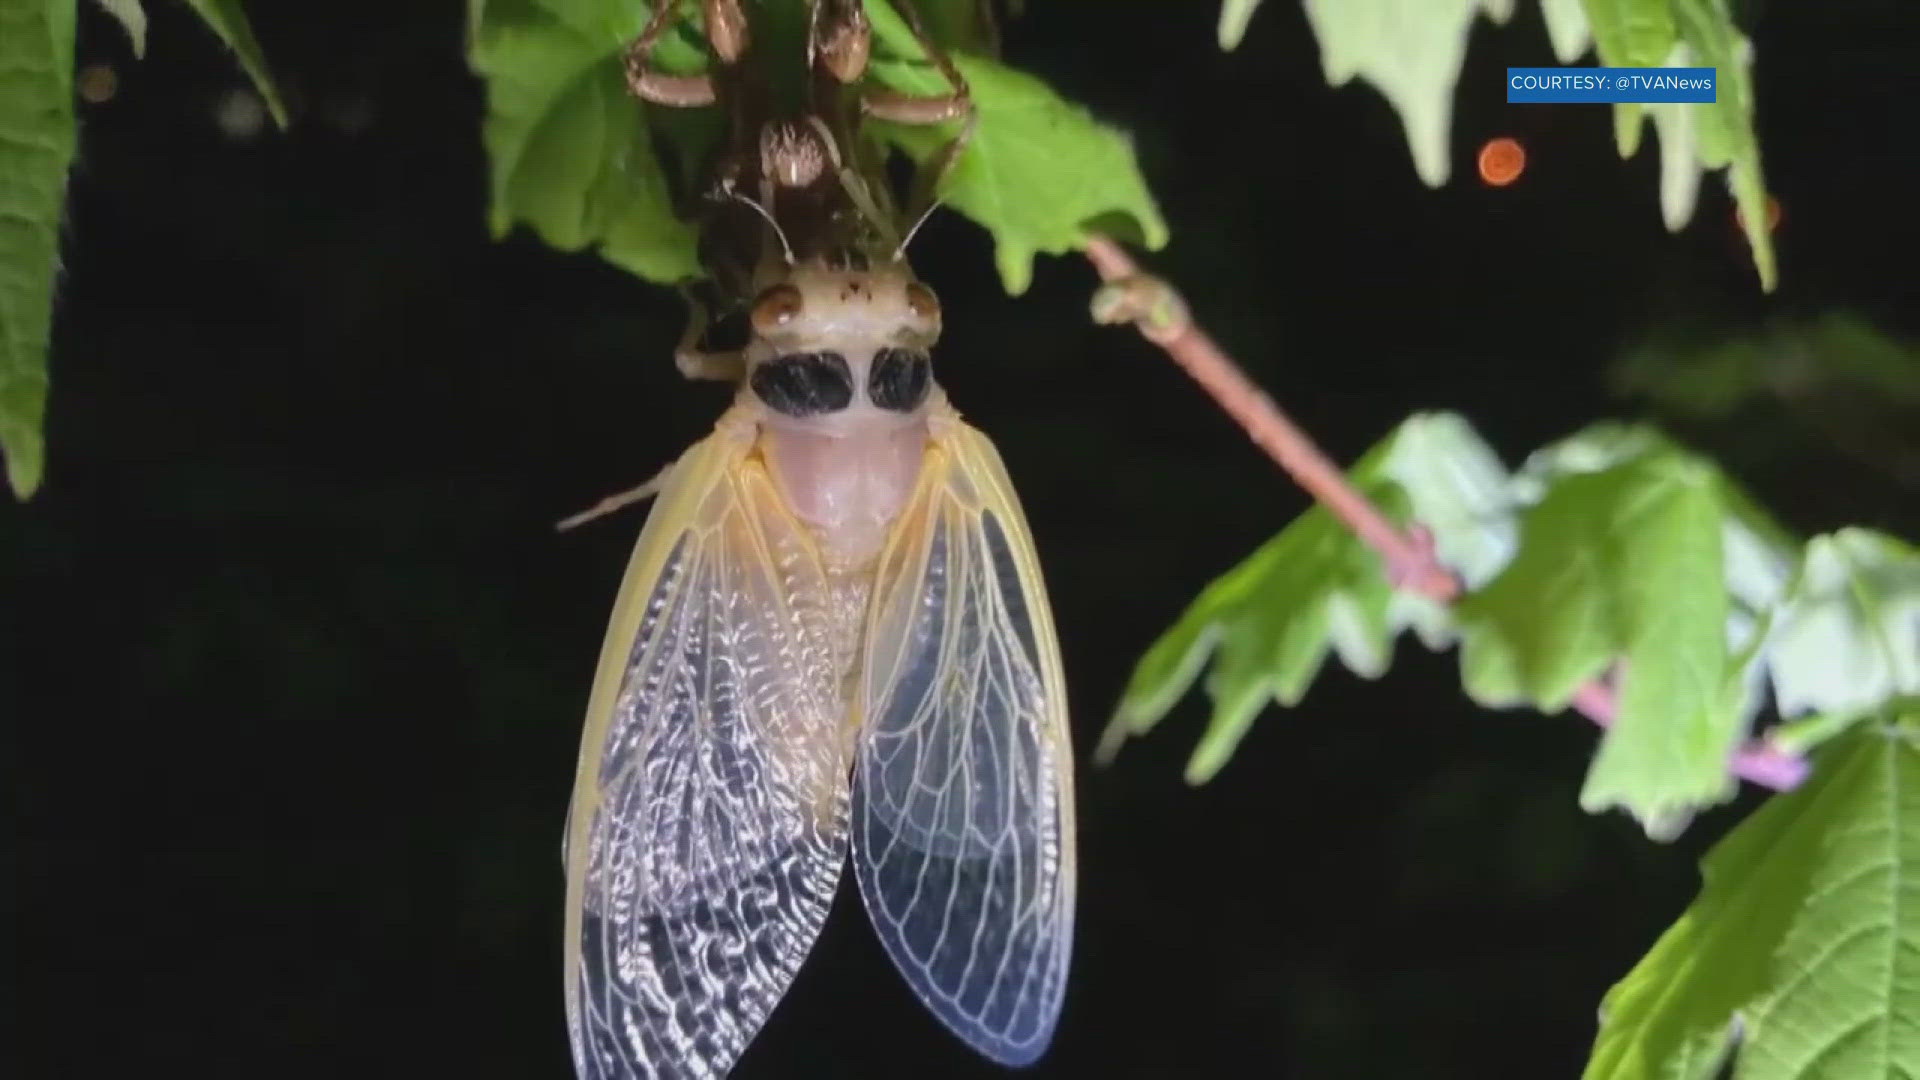 Tennessee Valley Authority speaks on Cicada swarm